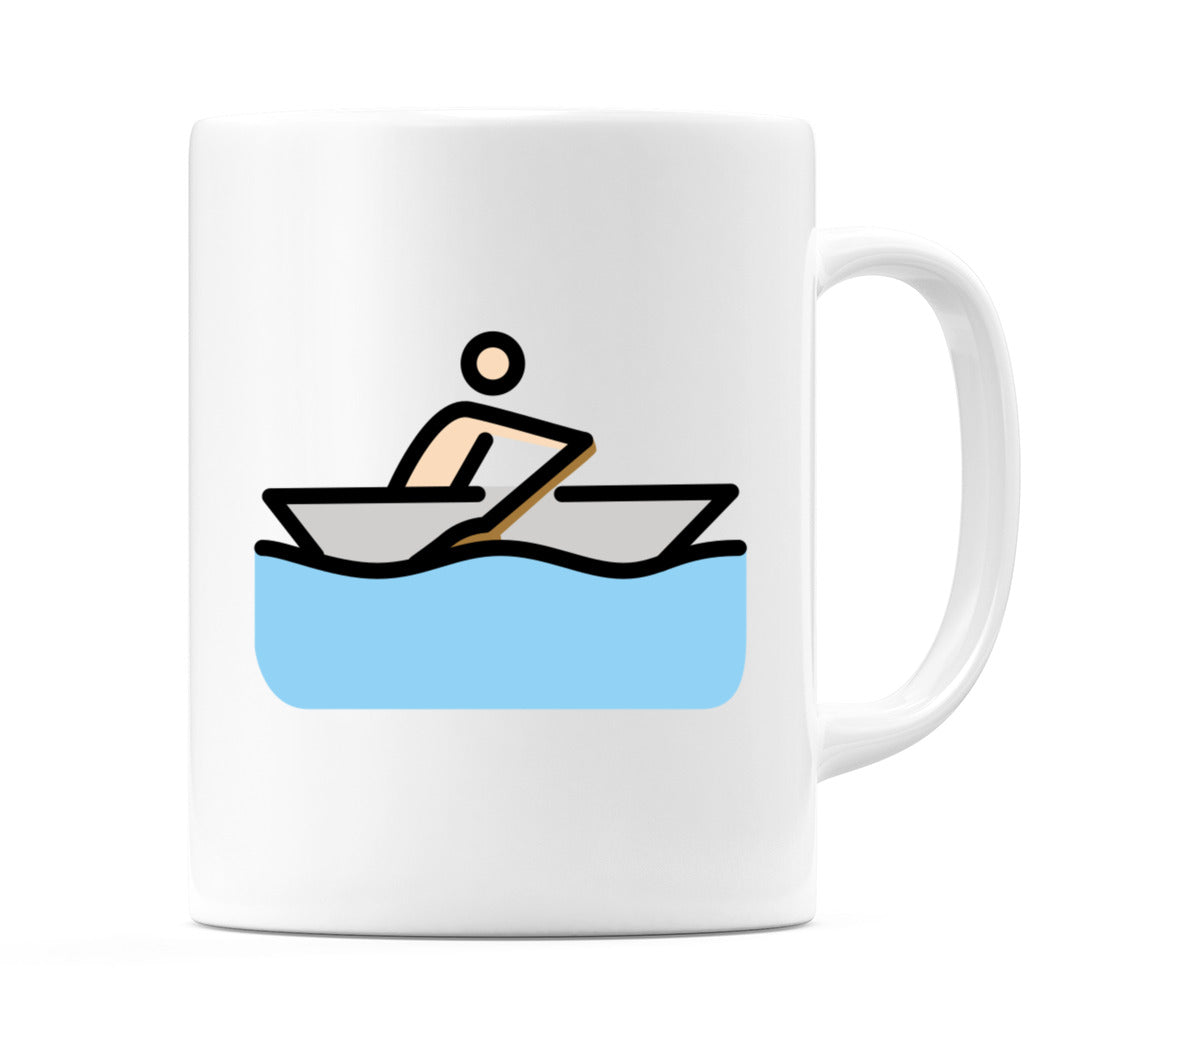 Male Rowing Boat: Light Skin Tone Emoji Mug